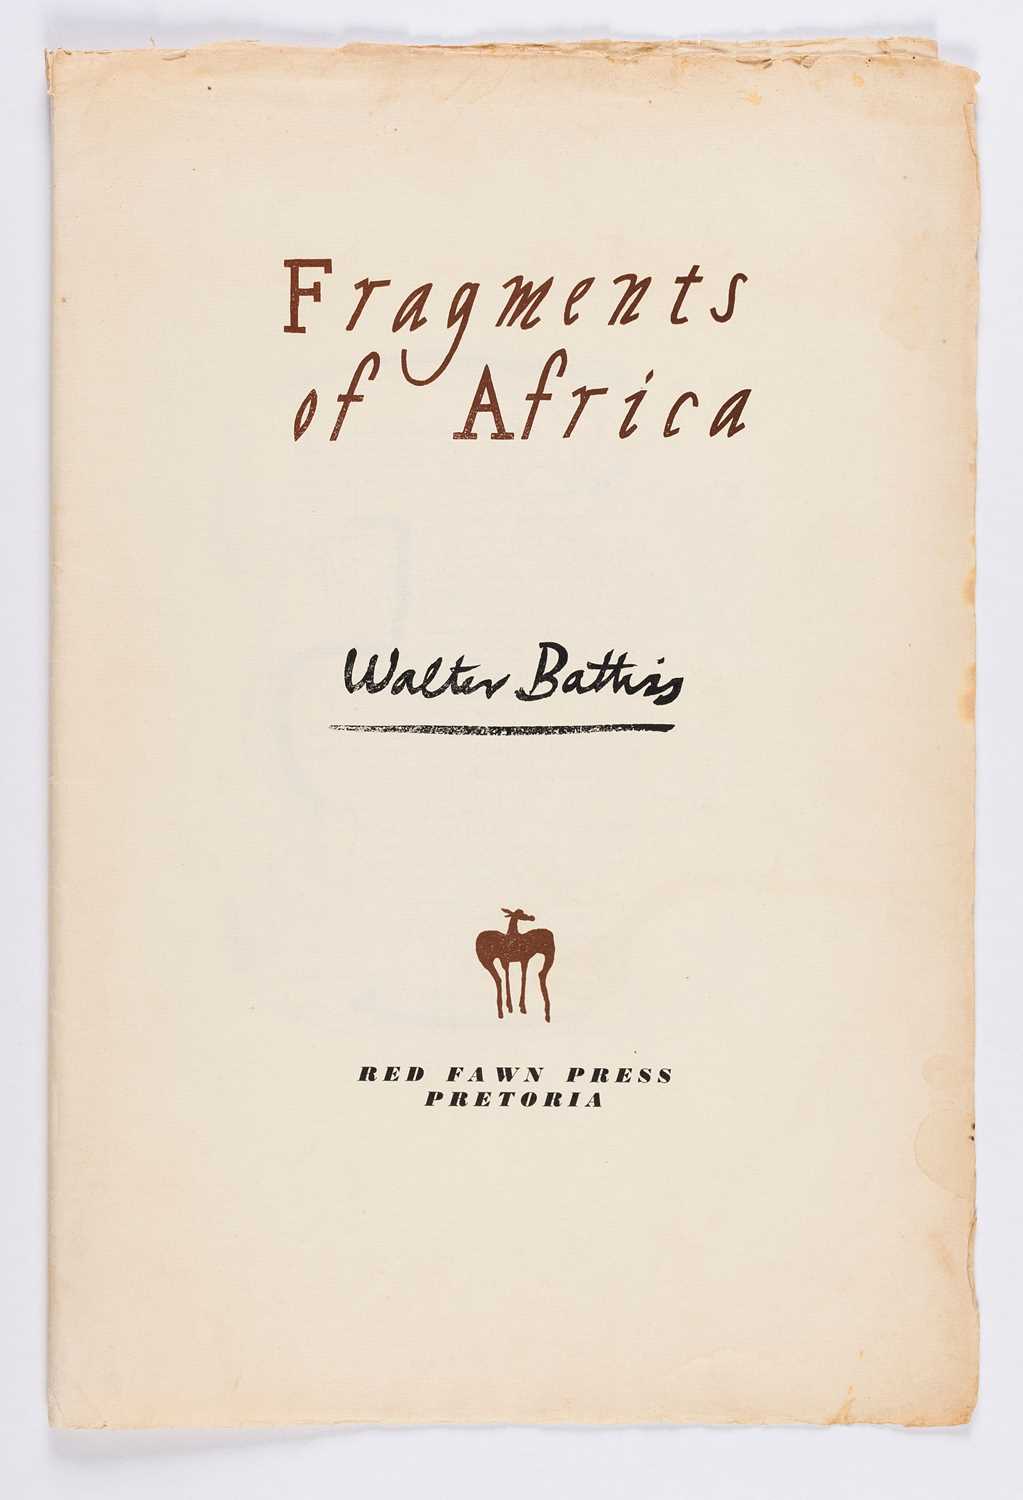 Lot 80 - Walter Battiss, Fragments of Africa